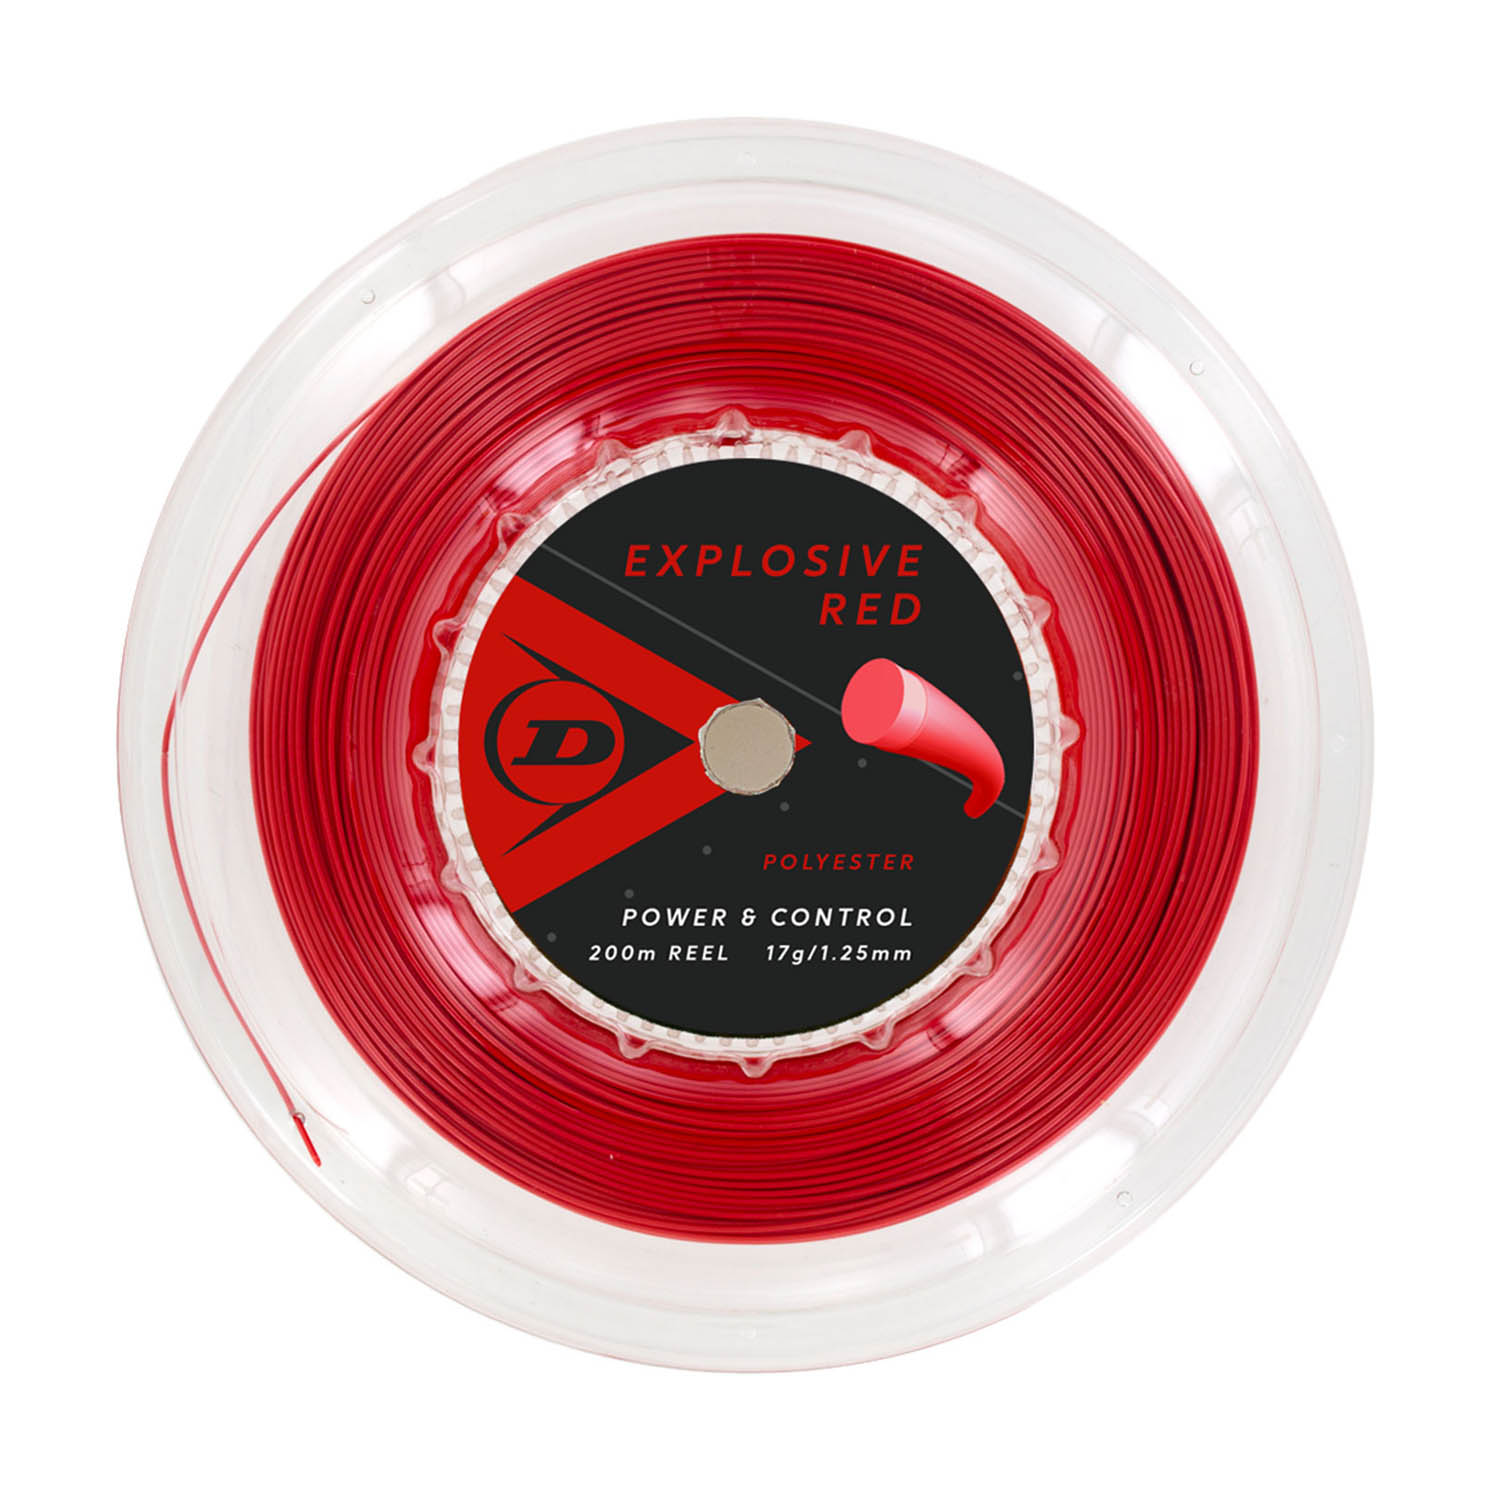 Dunlop Explosive Red 1.25 200 m Reel - Red